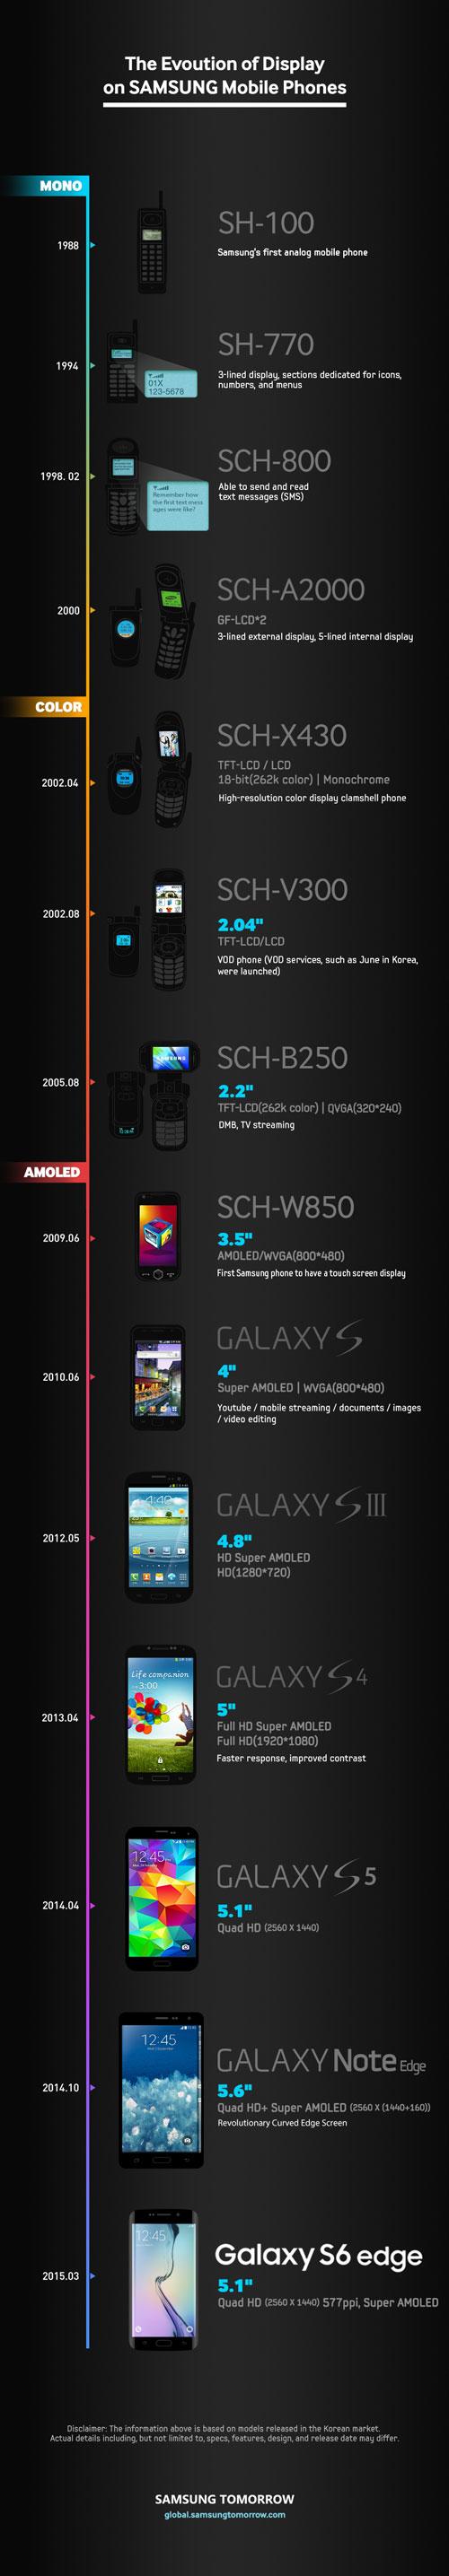 Evolución de las pantallas de dispositivos Samsung